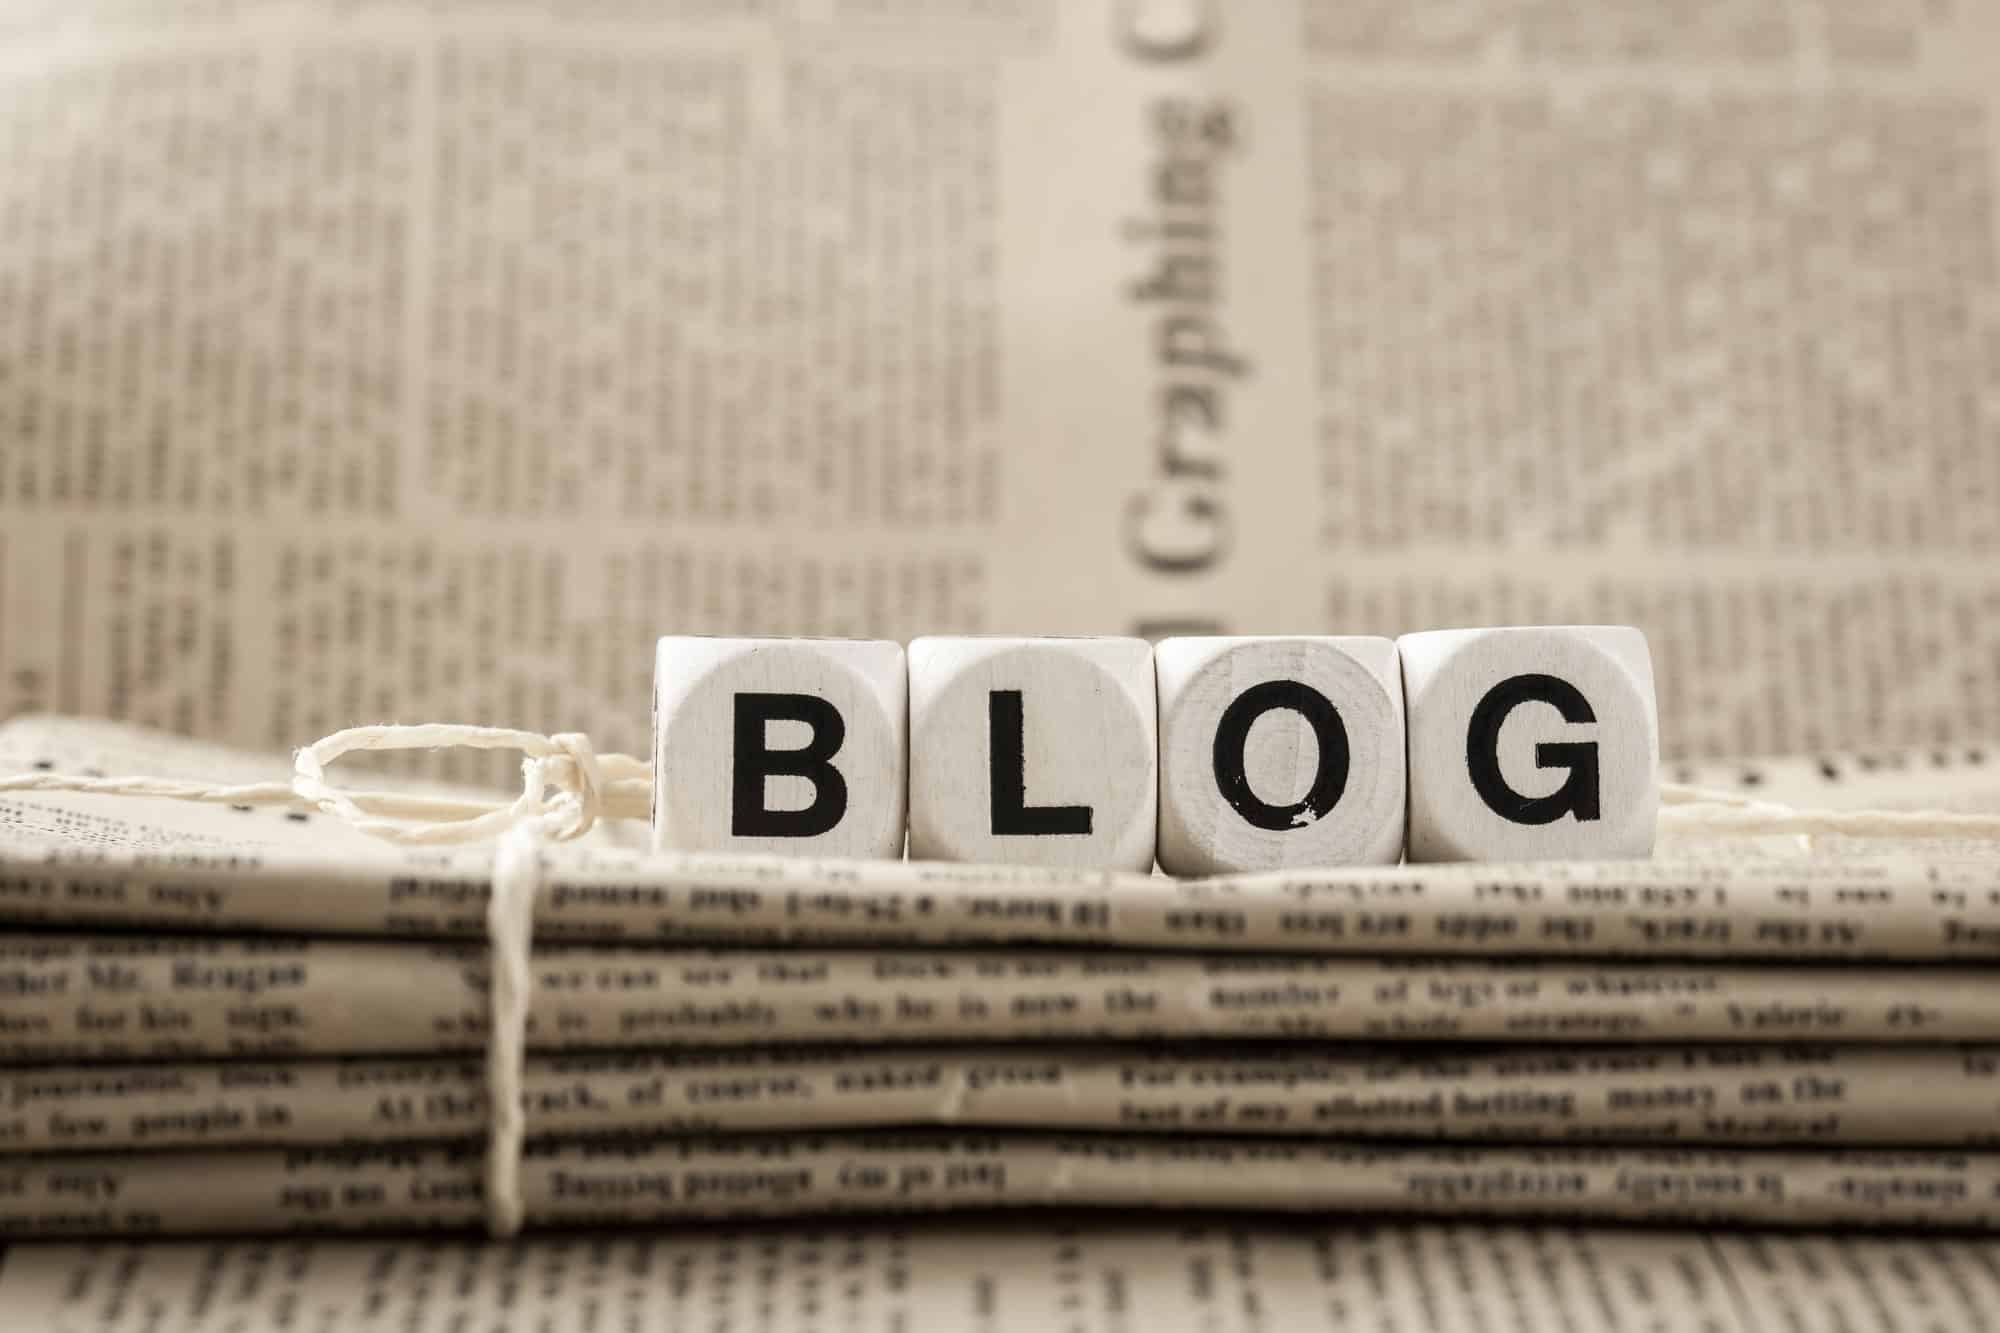 start-blogging